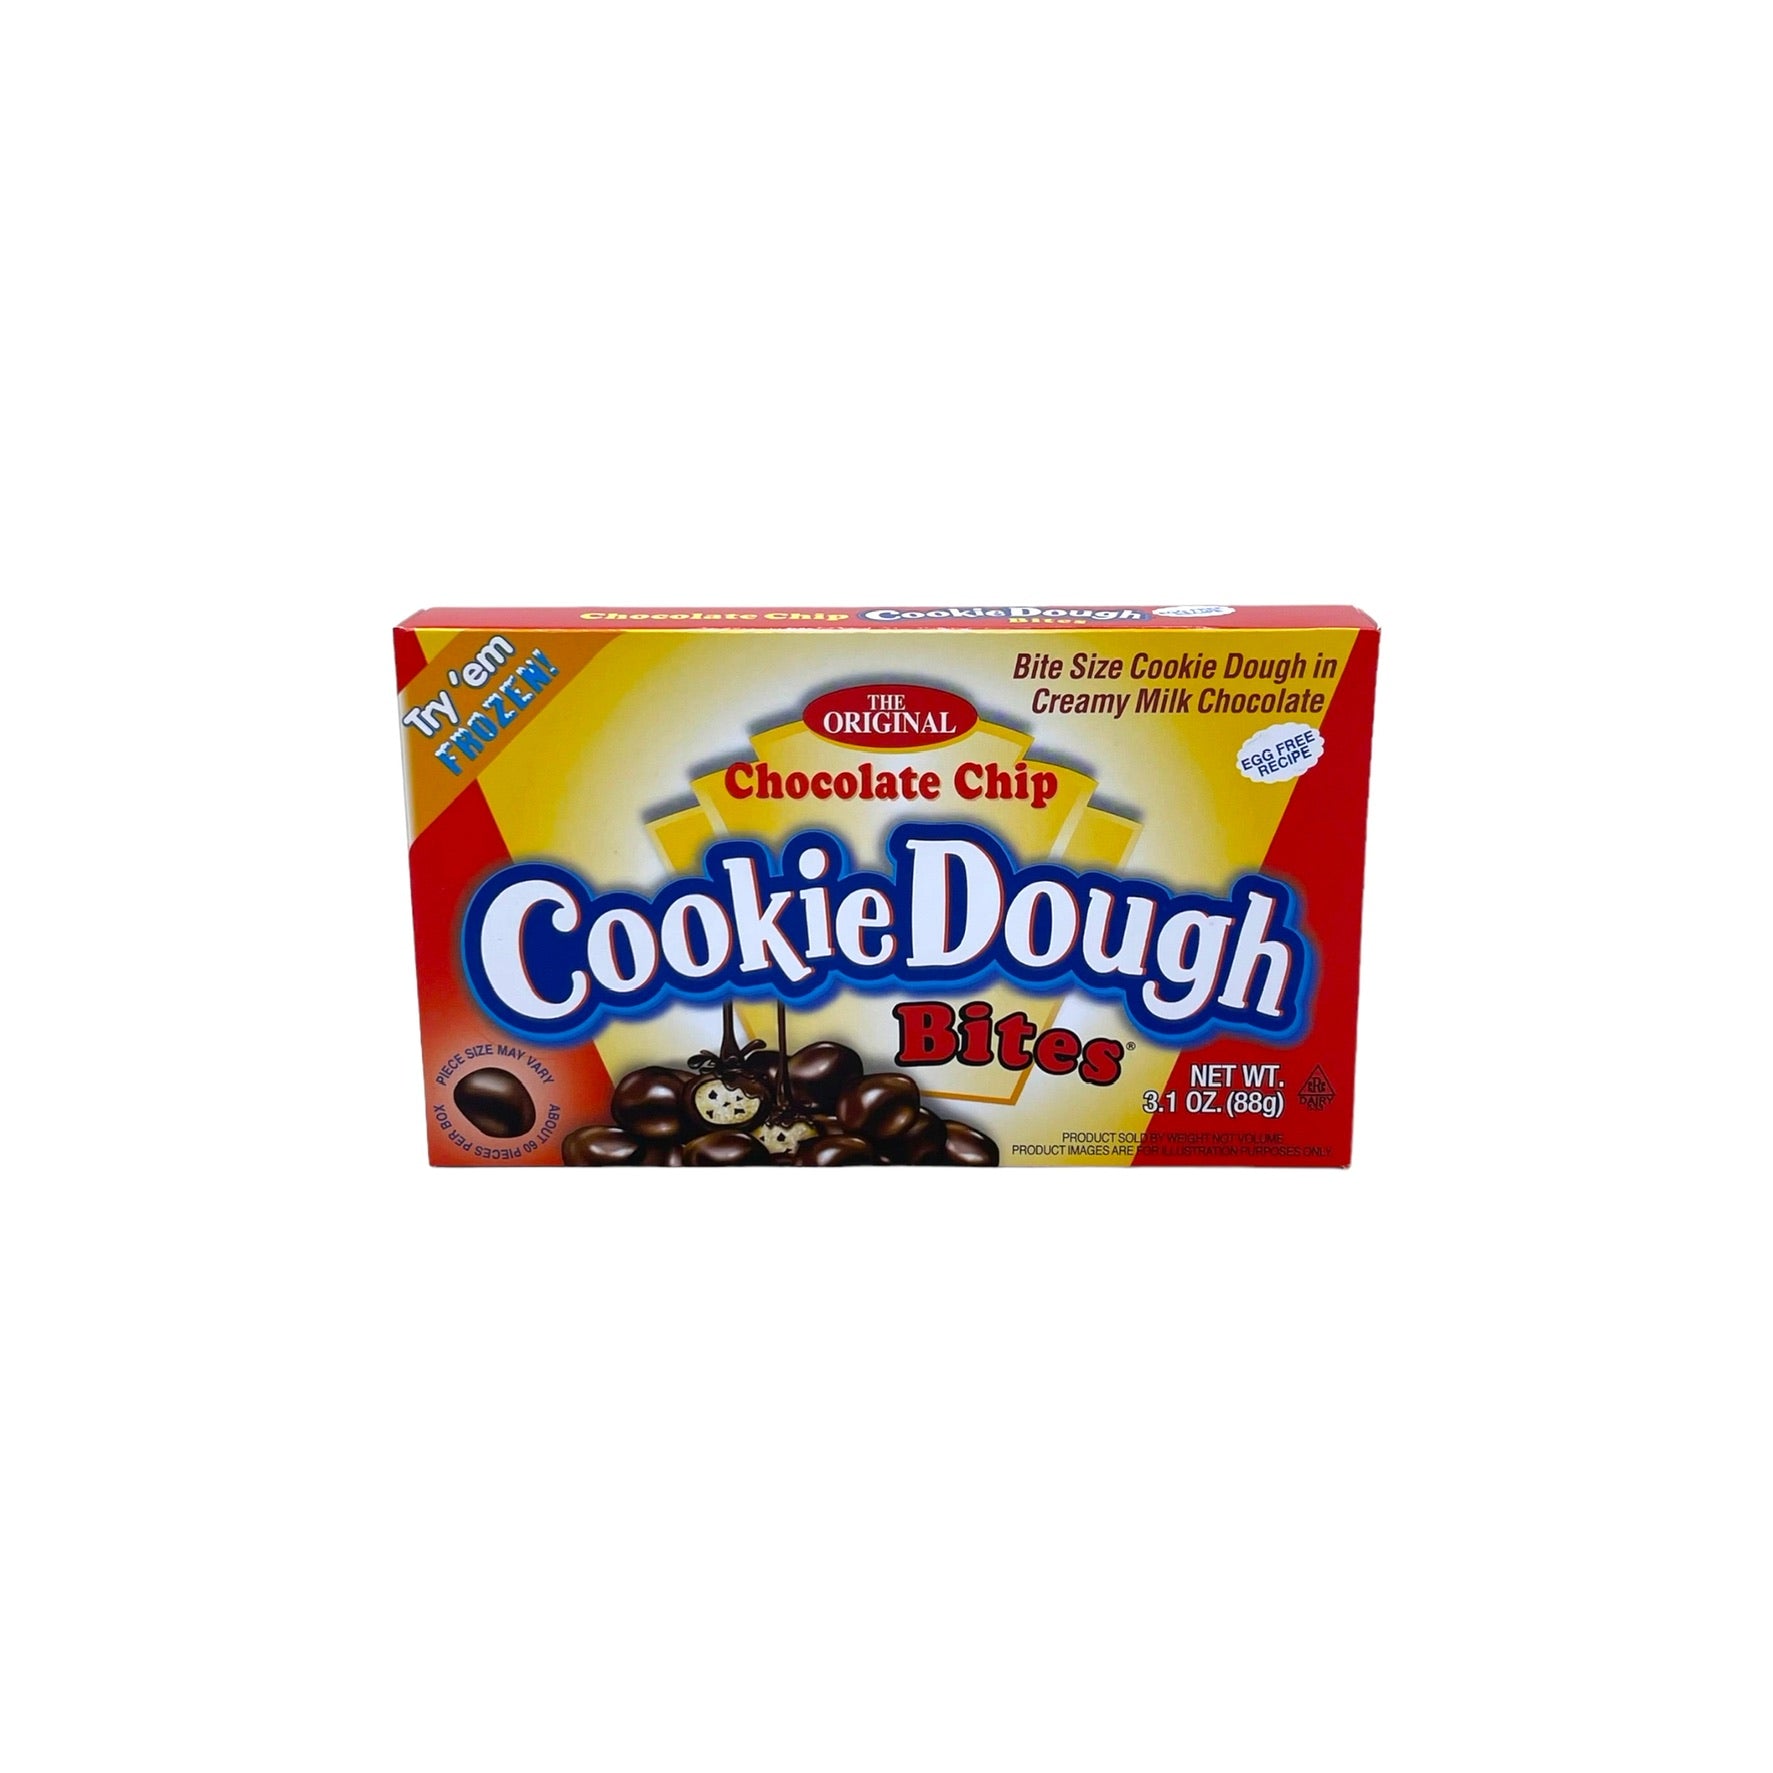 Cookie Dough Chocolate Chip Bites